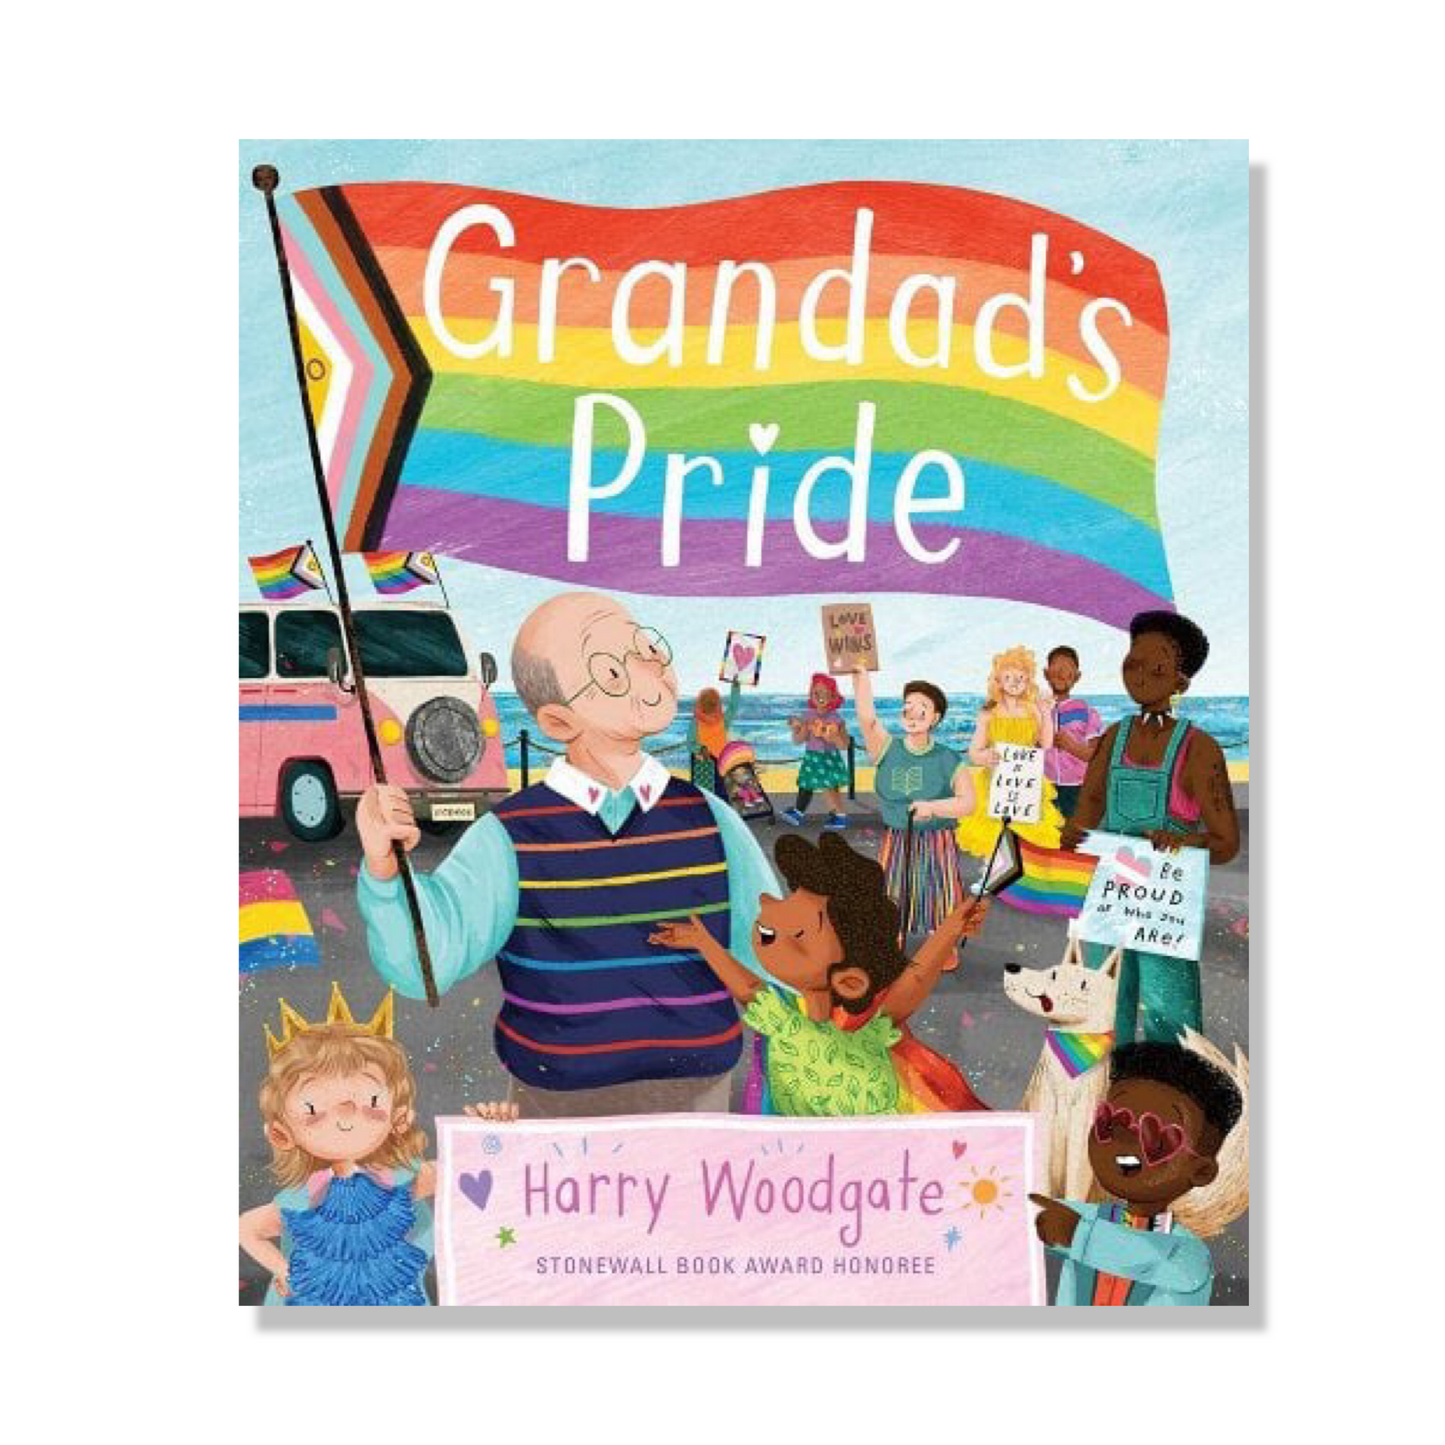 Grandad's Pride